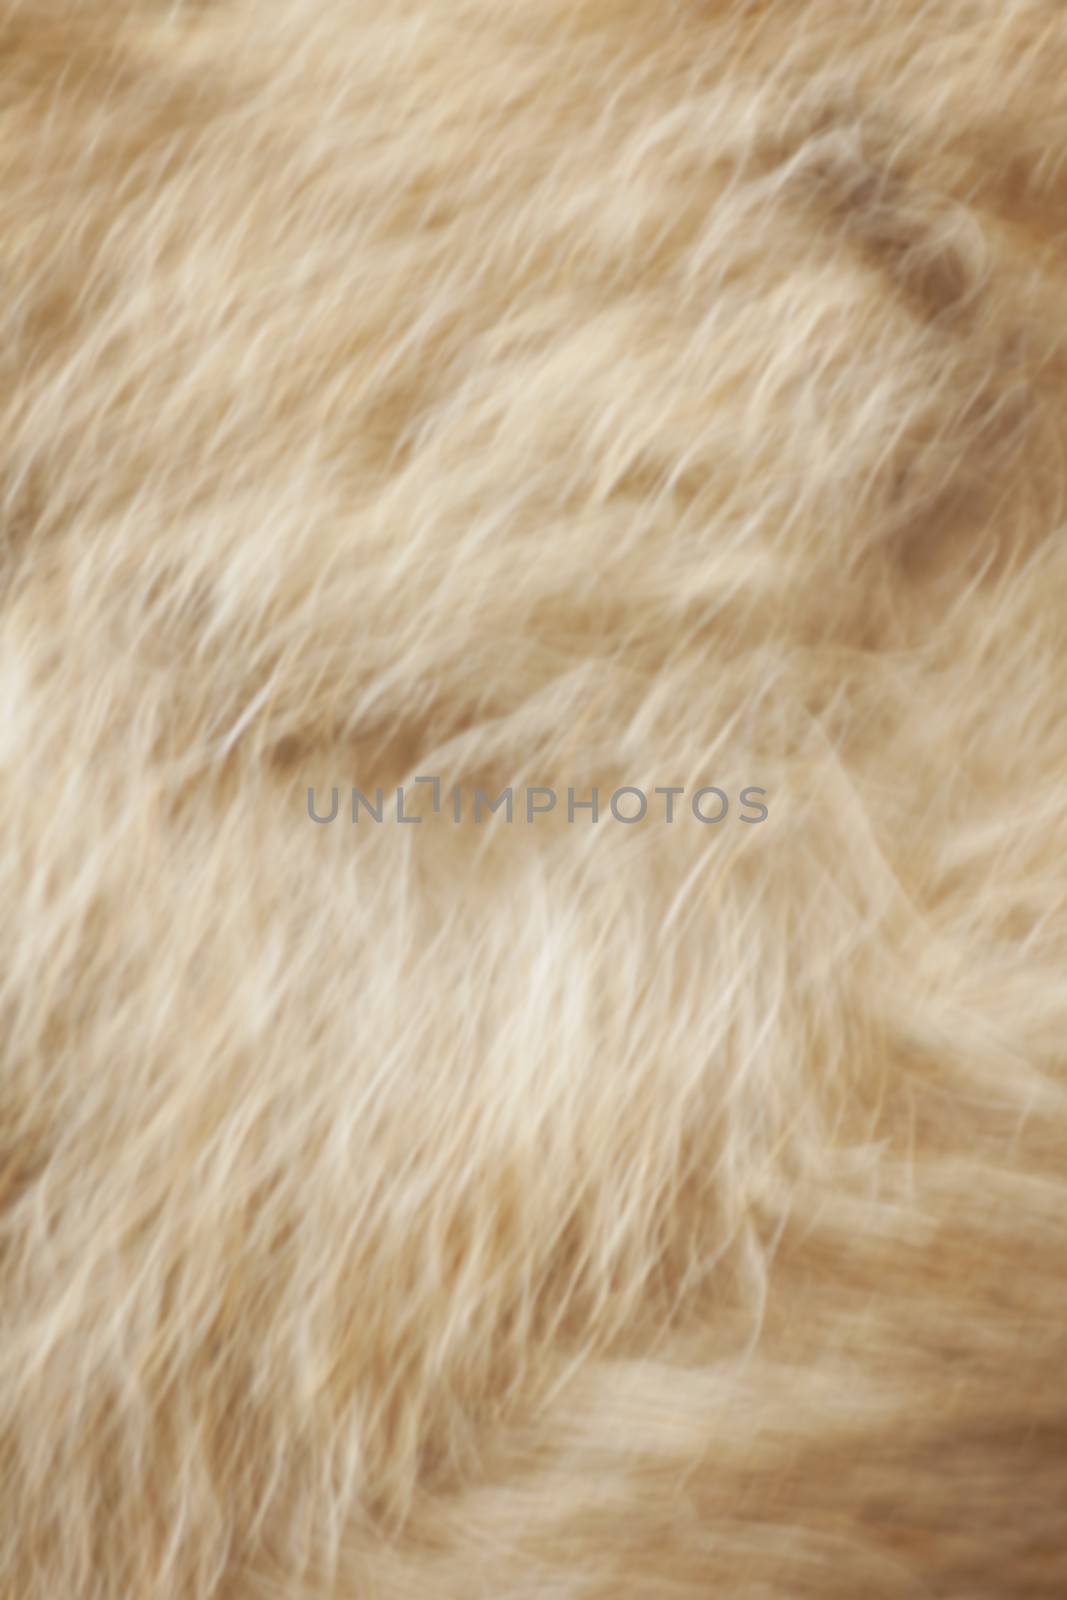 Soft blurred fur background